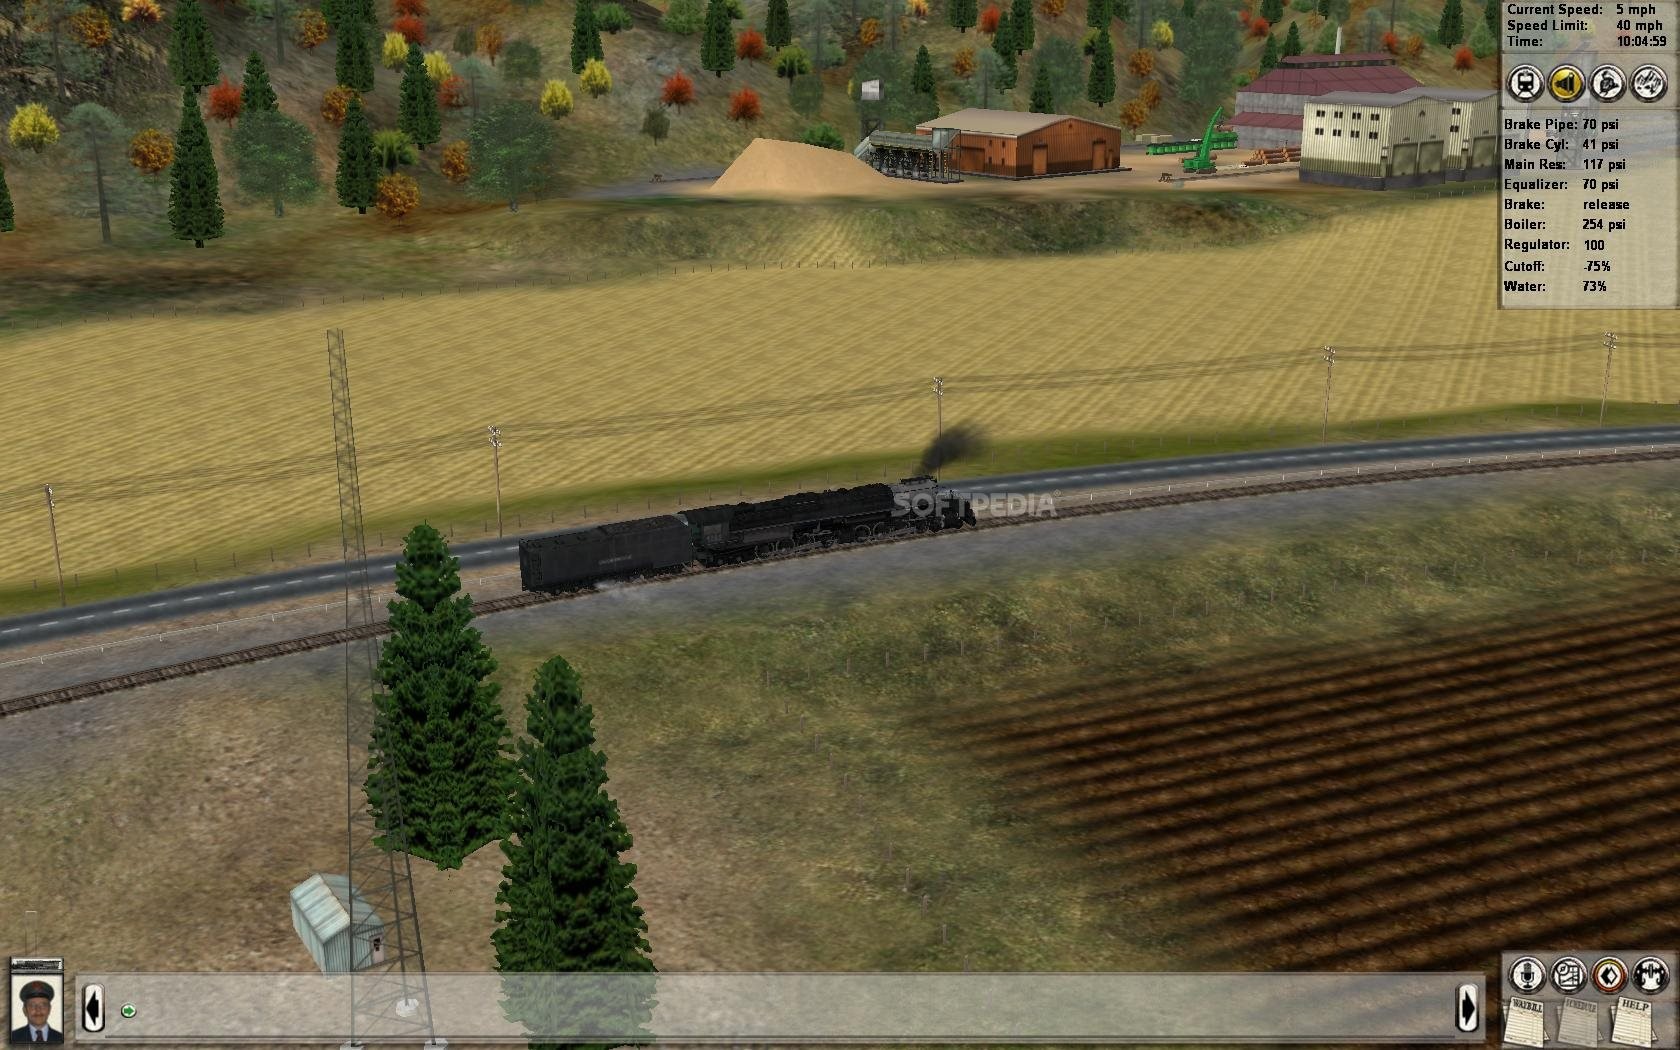 trainz railroad simulator 2006 limited edition